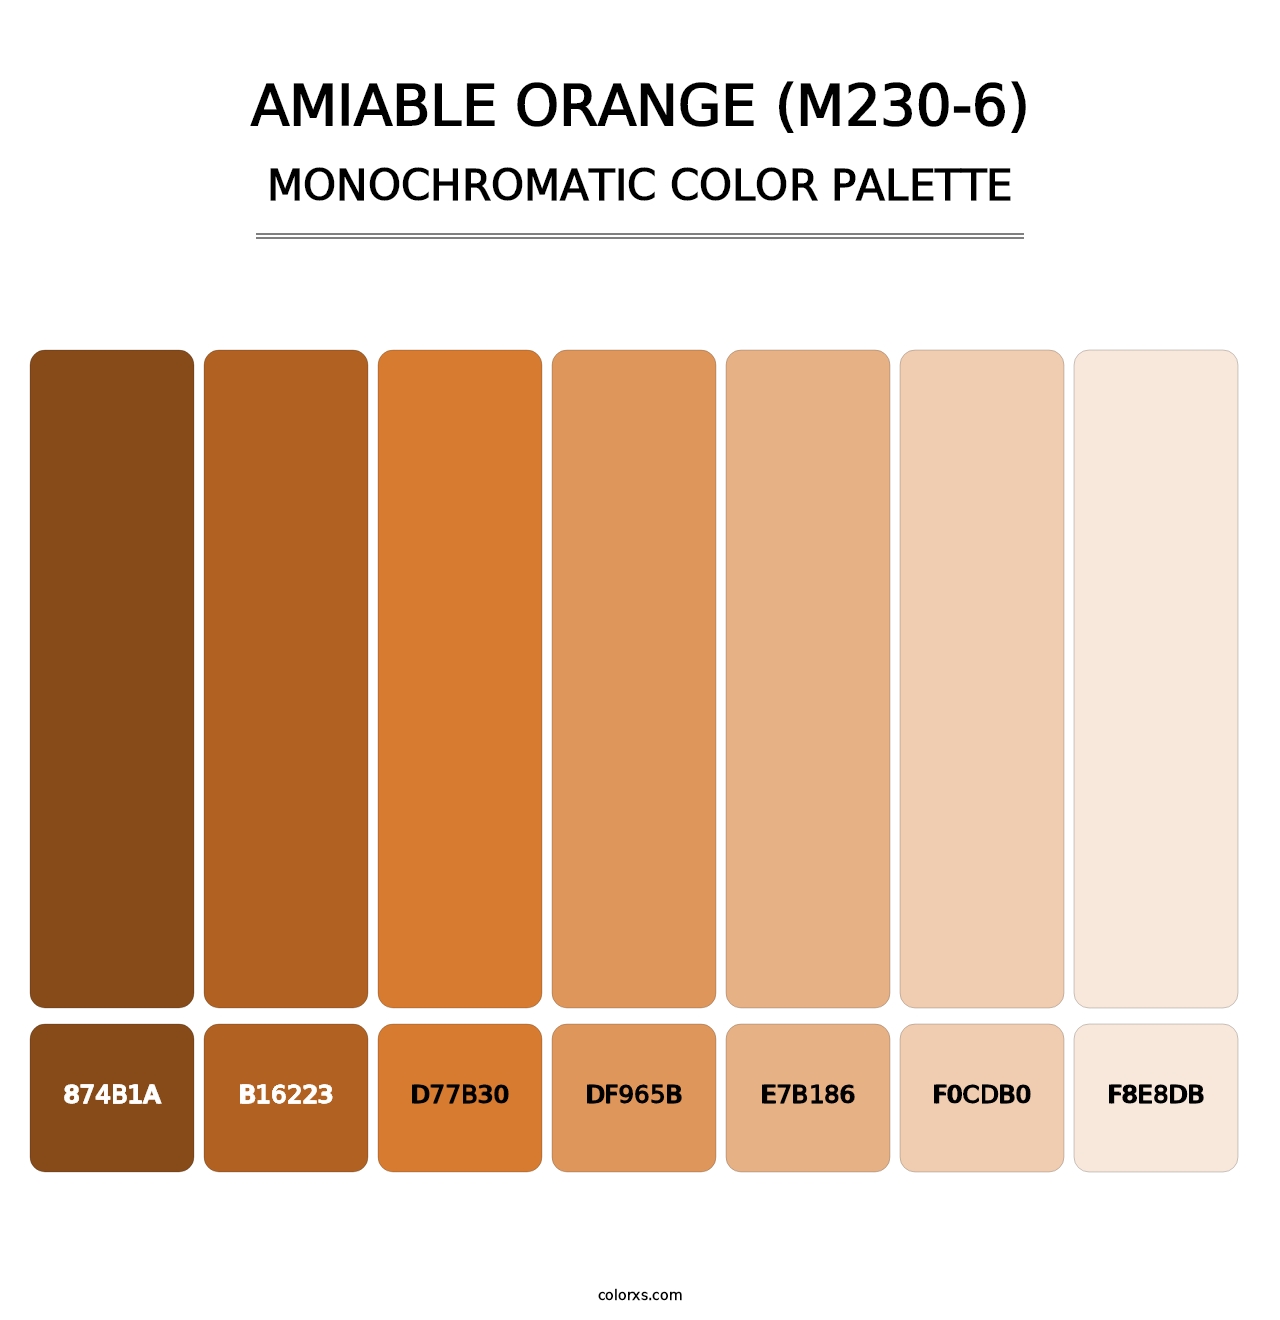 Amiable Orange (M230-6) - Monochromatic Color Palette